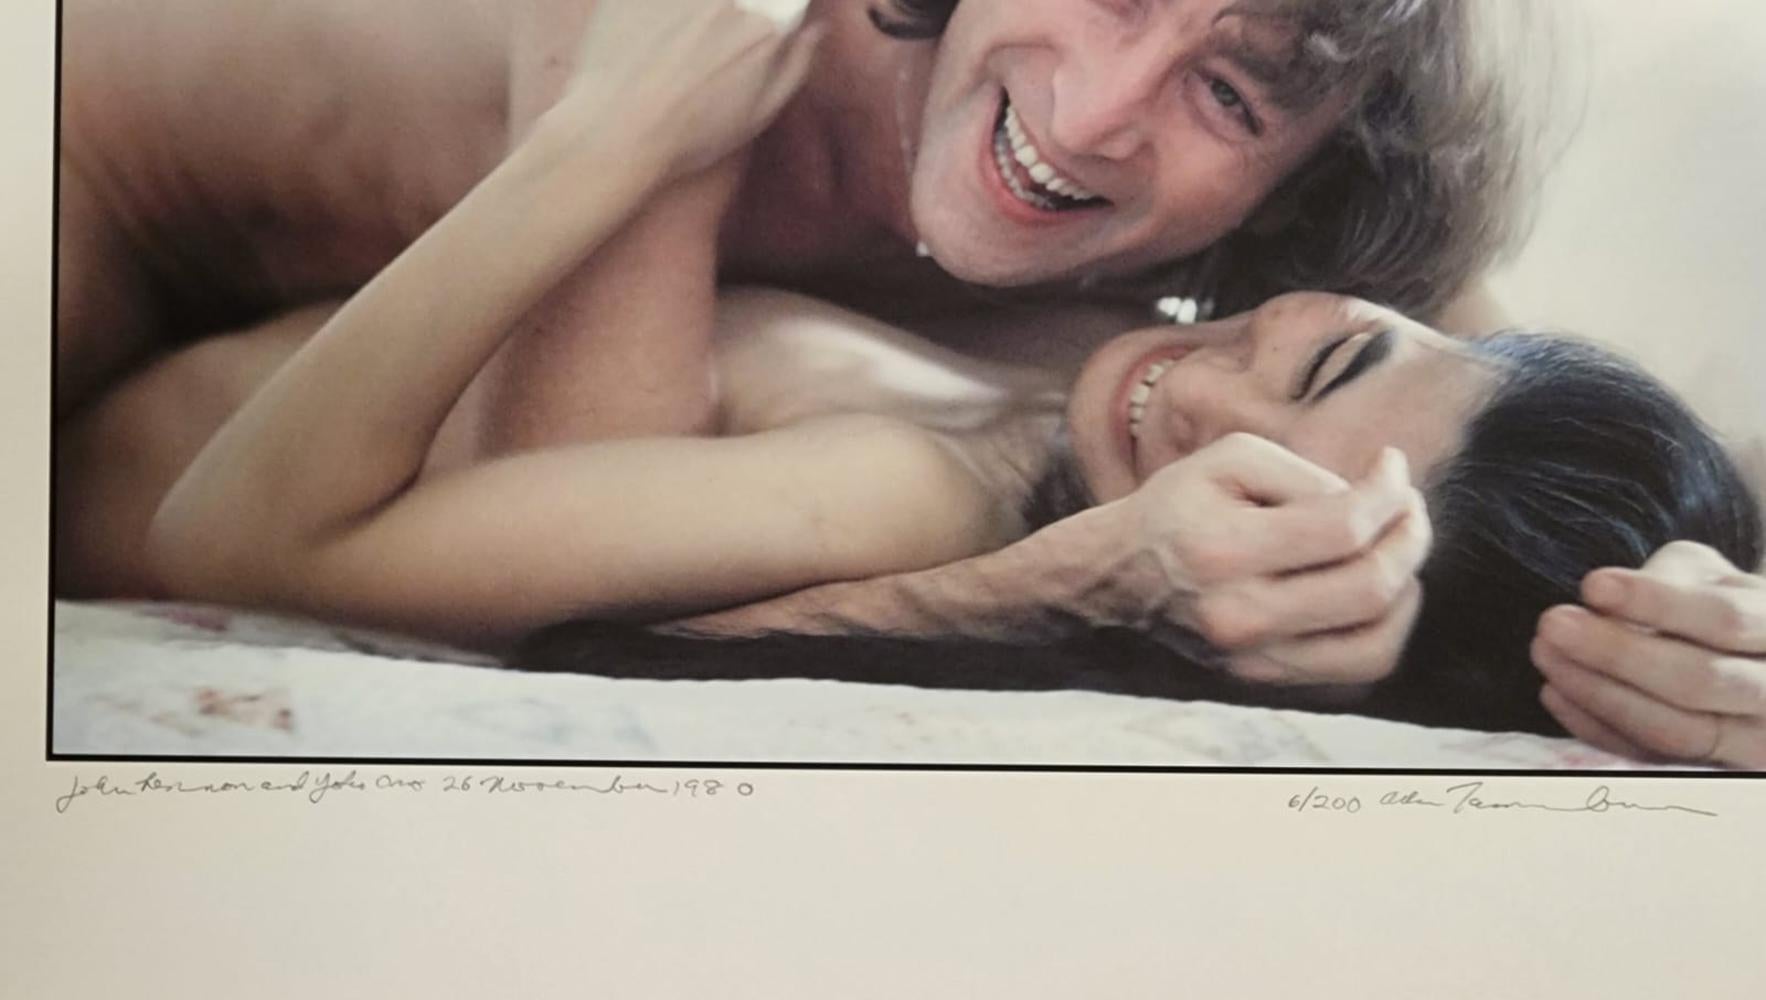 John and Yoko Kimonos Bed Laugh, NYC, 1980 - Photograph by Allan Tannenbaum